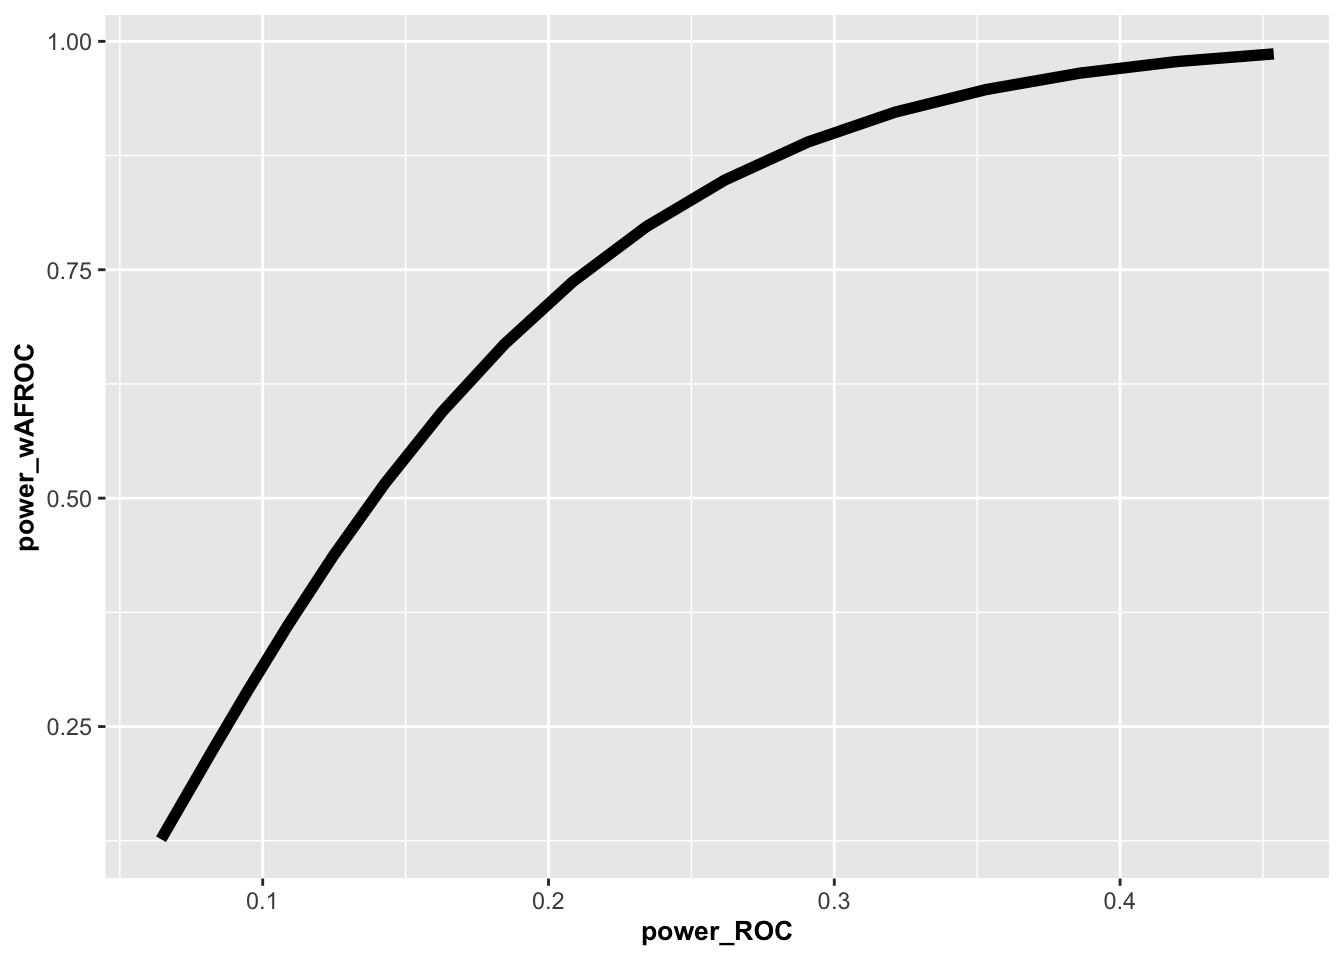 Plot of wAFROC power vs. ROC power. For ROC effect size = 0.035 the wAFROC effect size is 0.0759, the ROC power is 0.234 while the wAFROC power is 0.796.